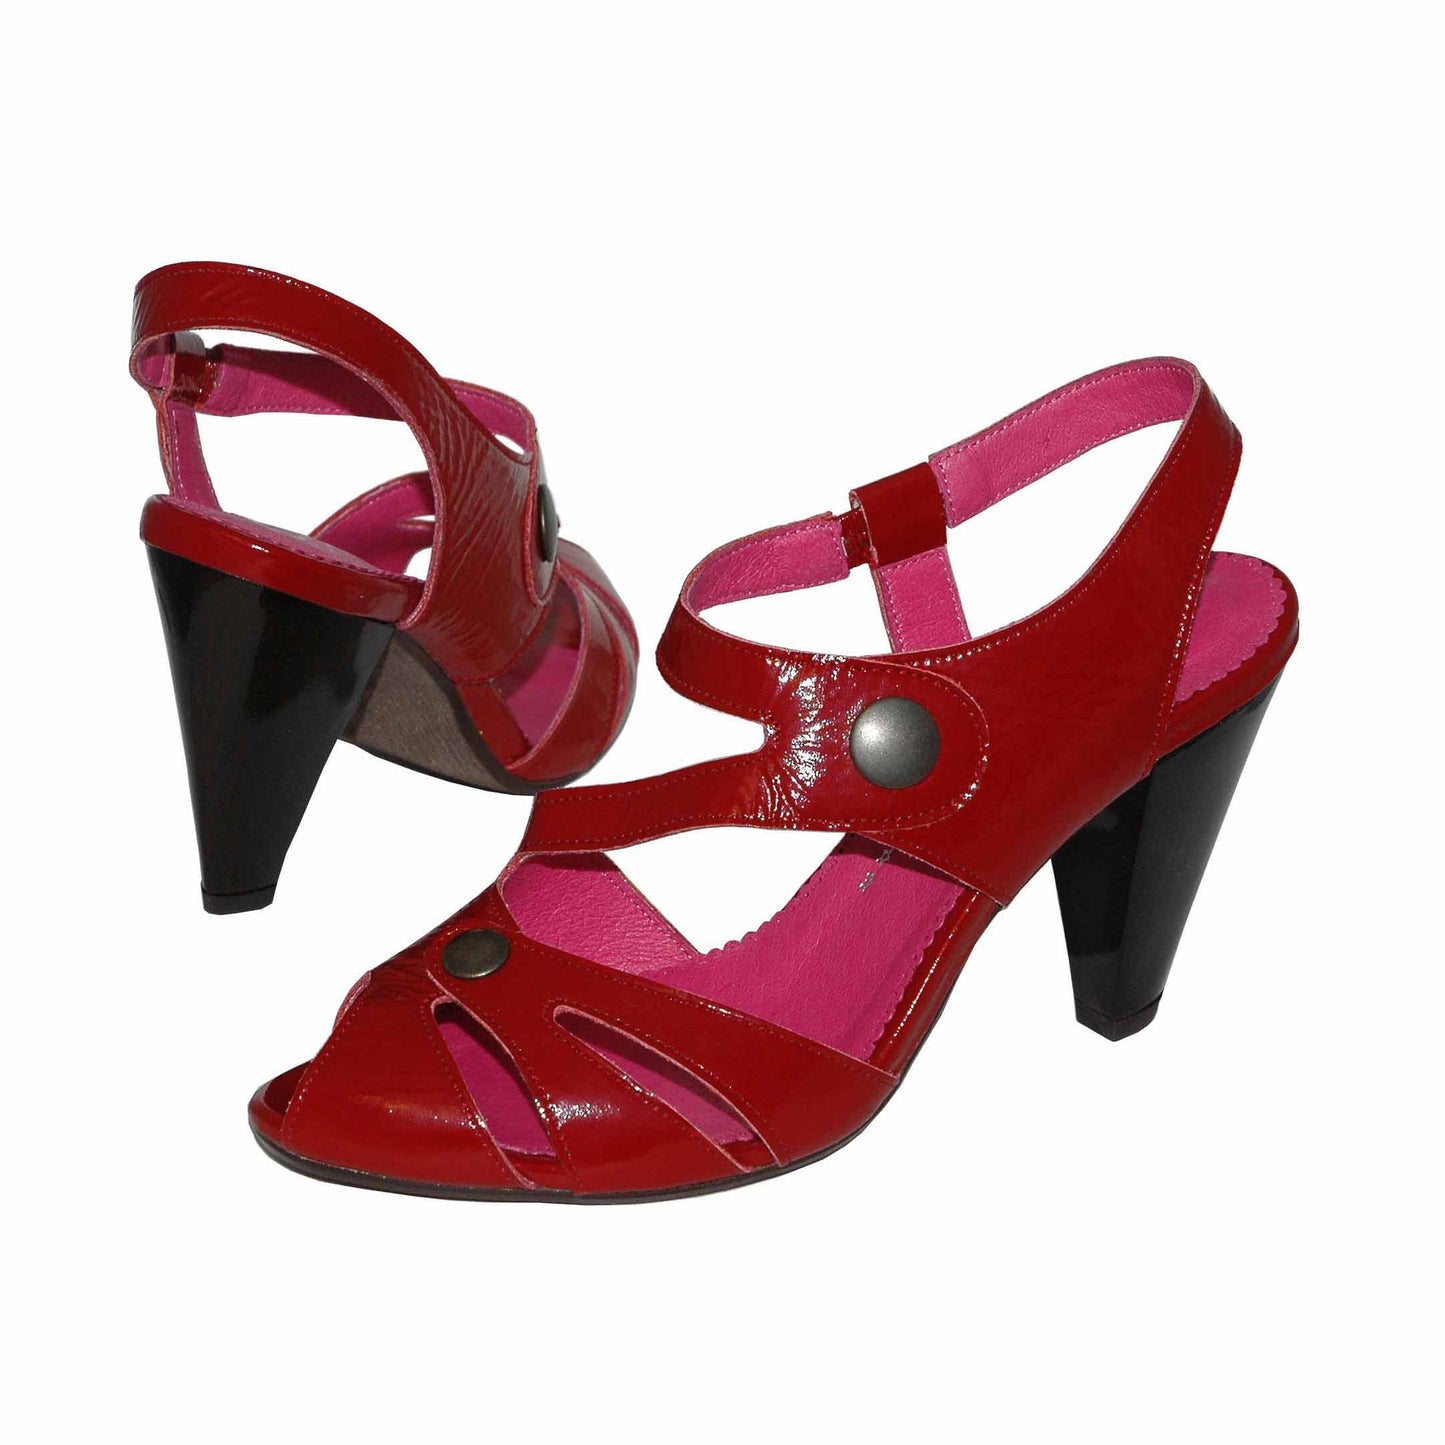 Chardonnay - Red Patent open toe shoe- LAST PAIR 40!